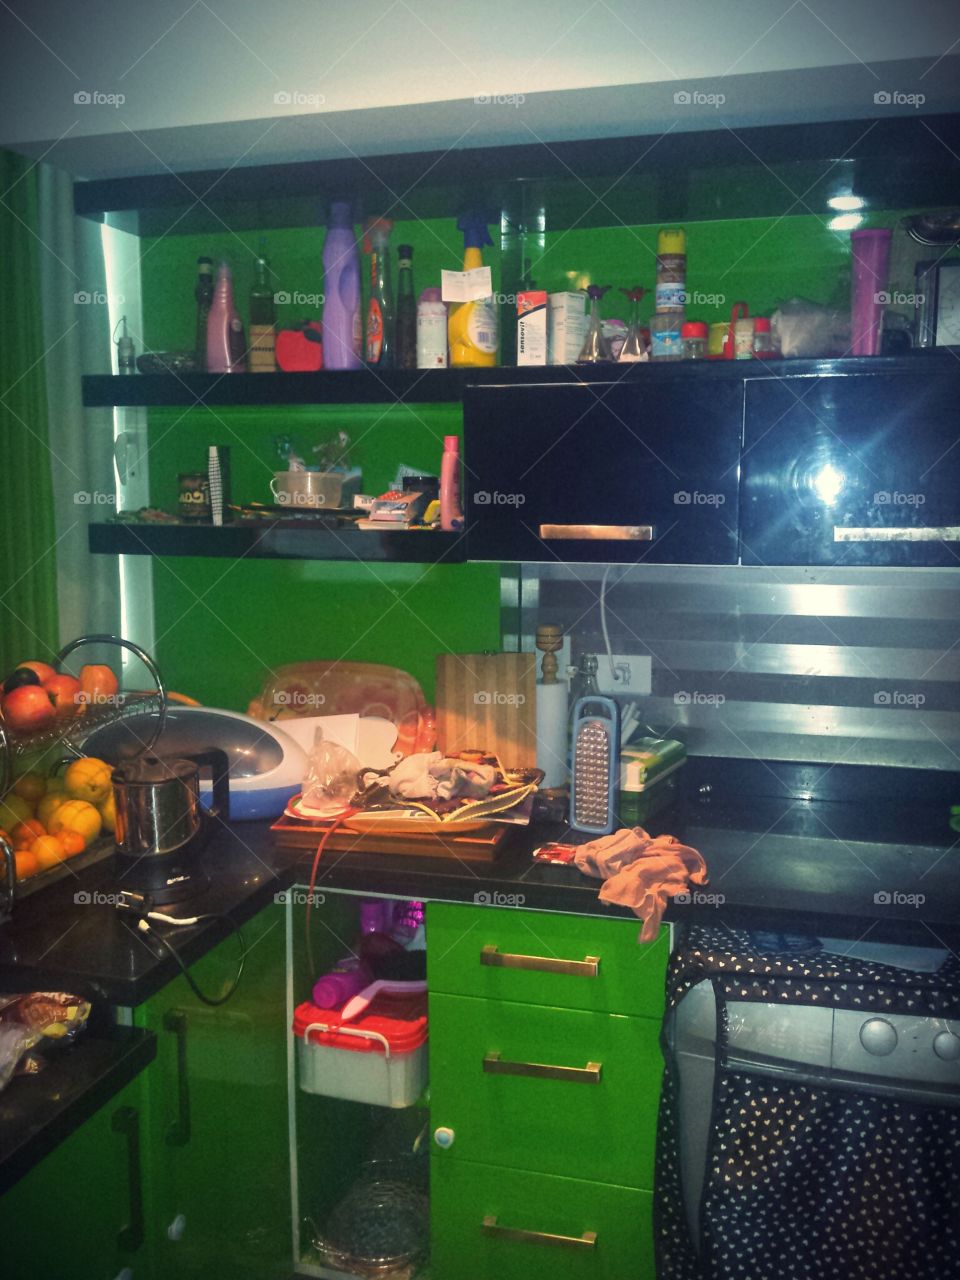 what a messy kitchen